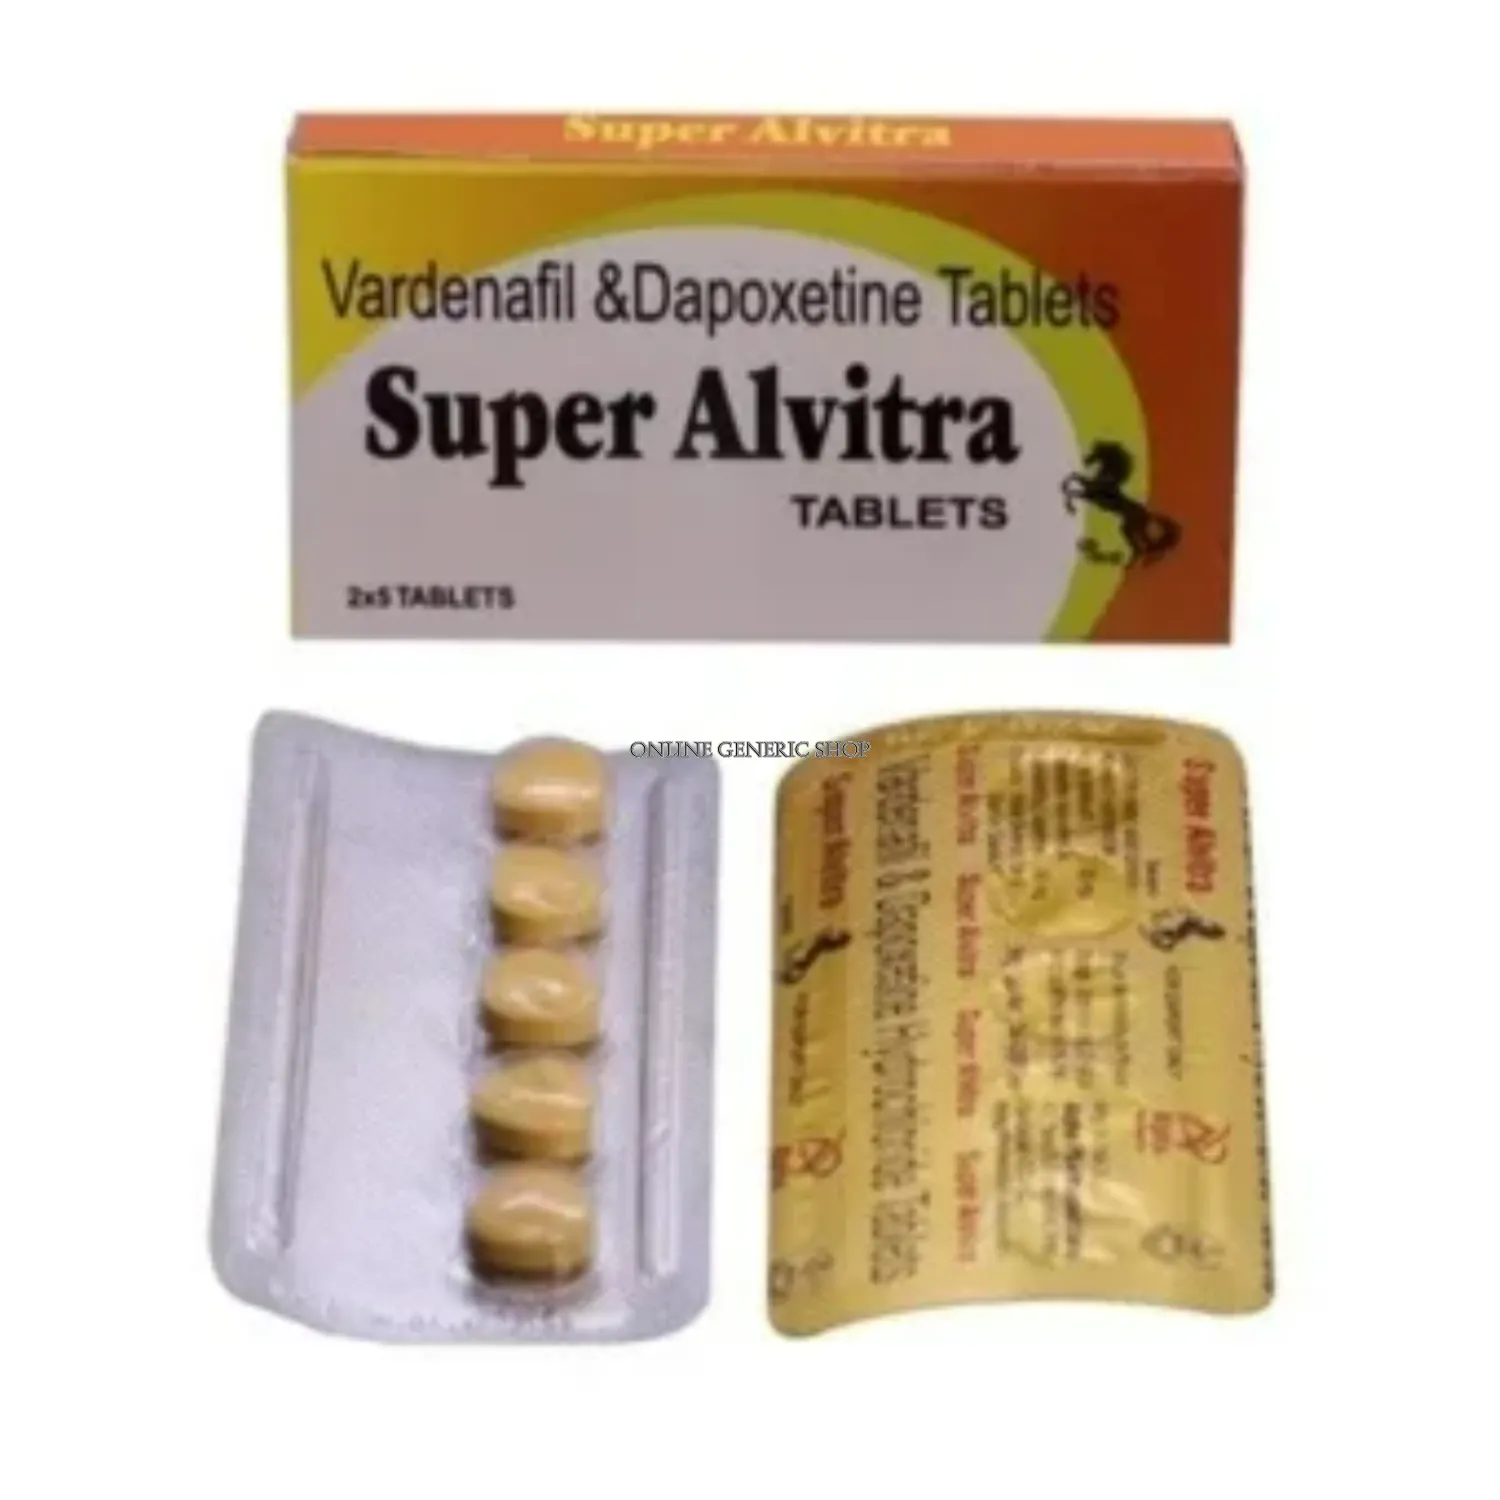 Super Alvitra image